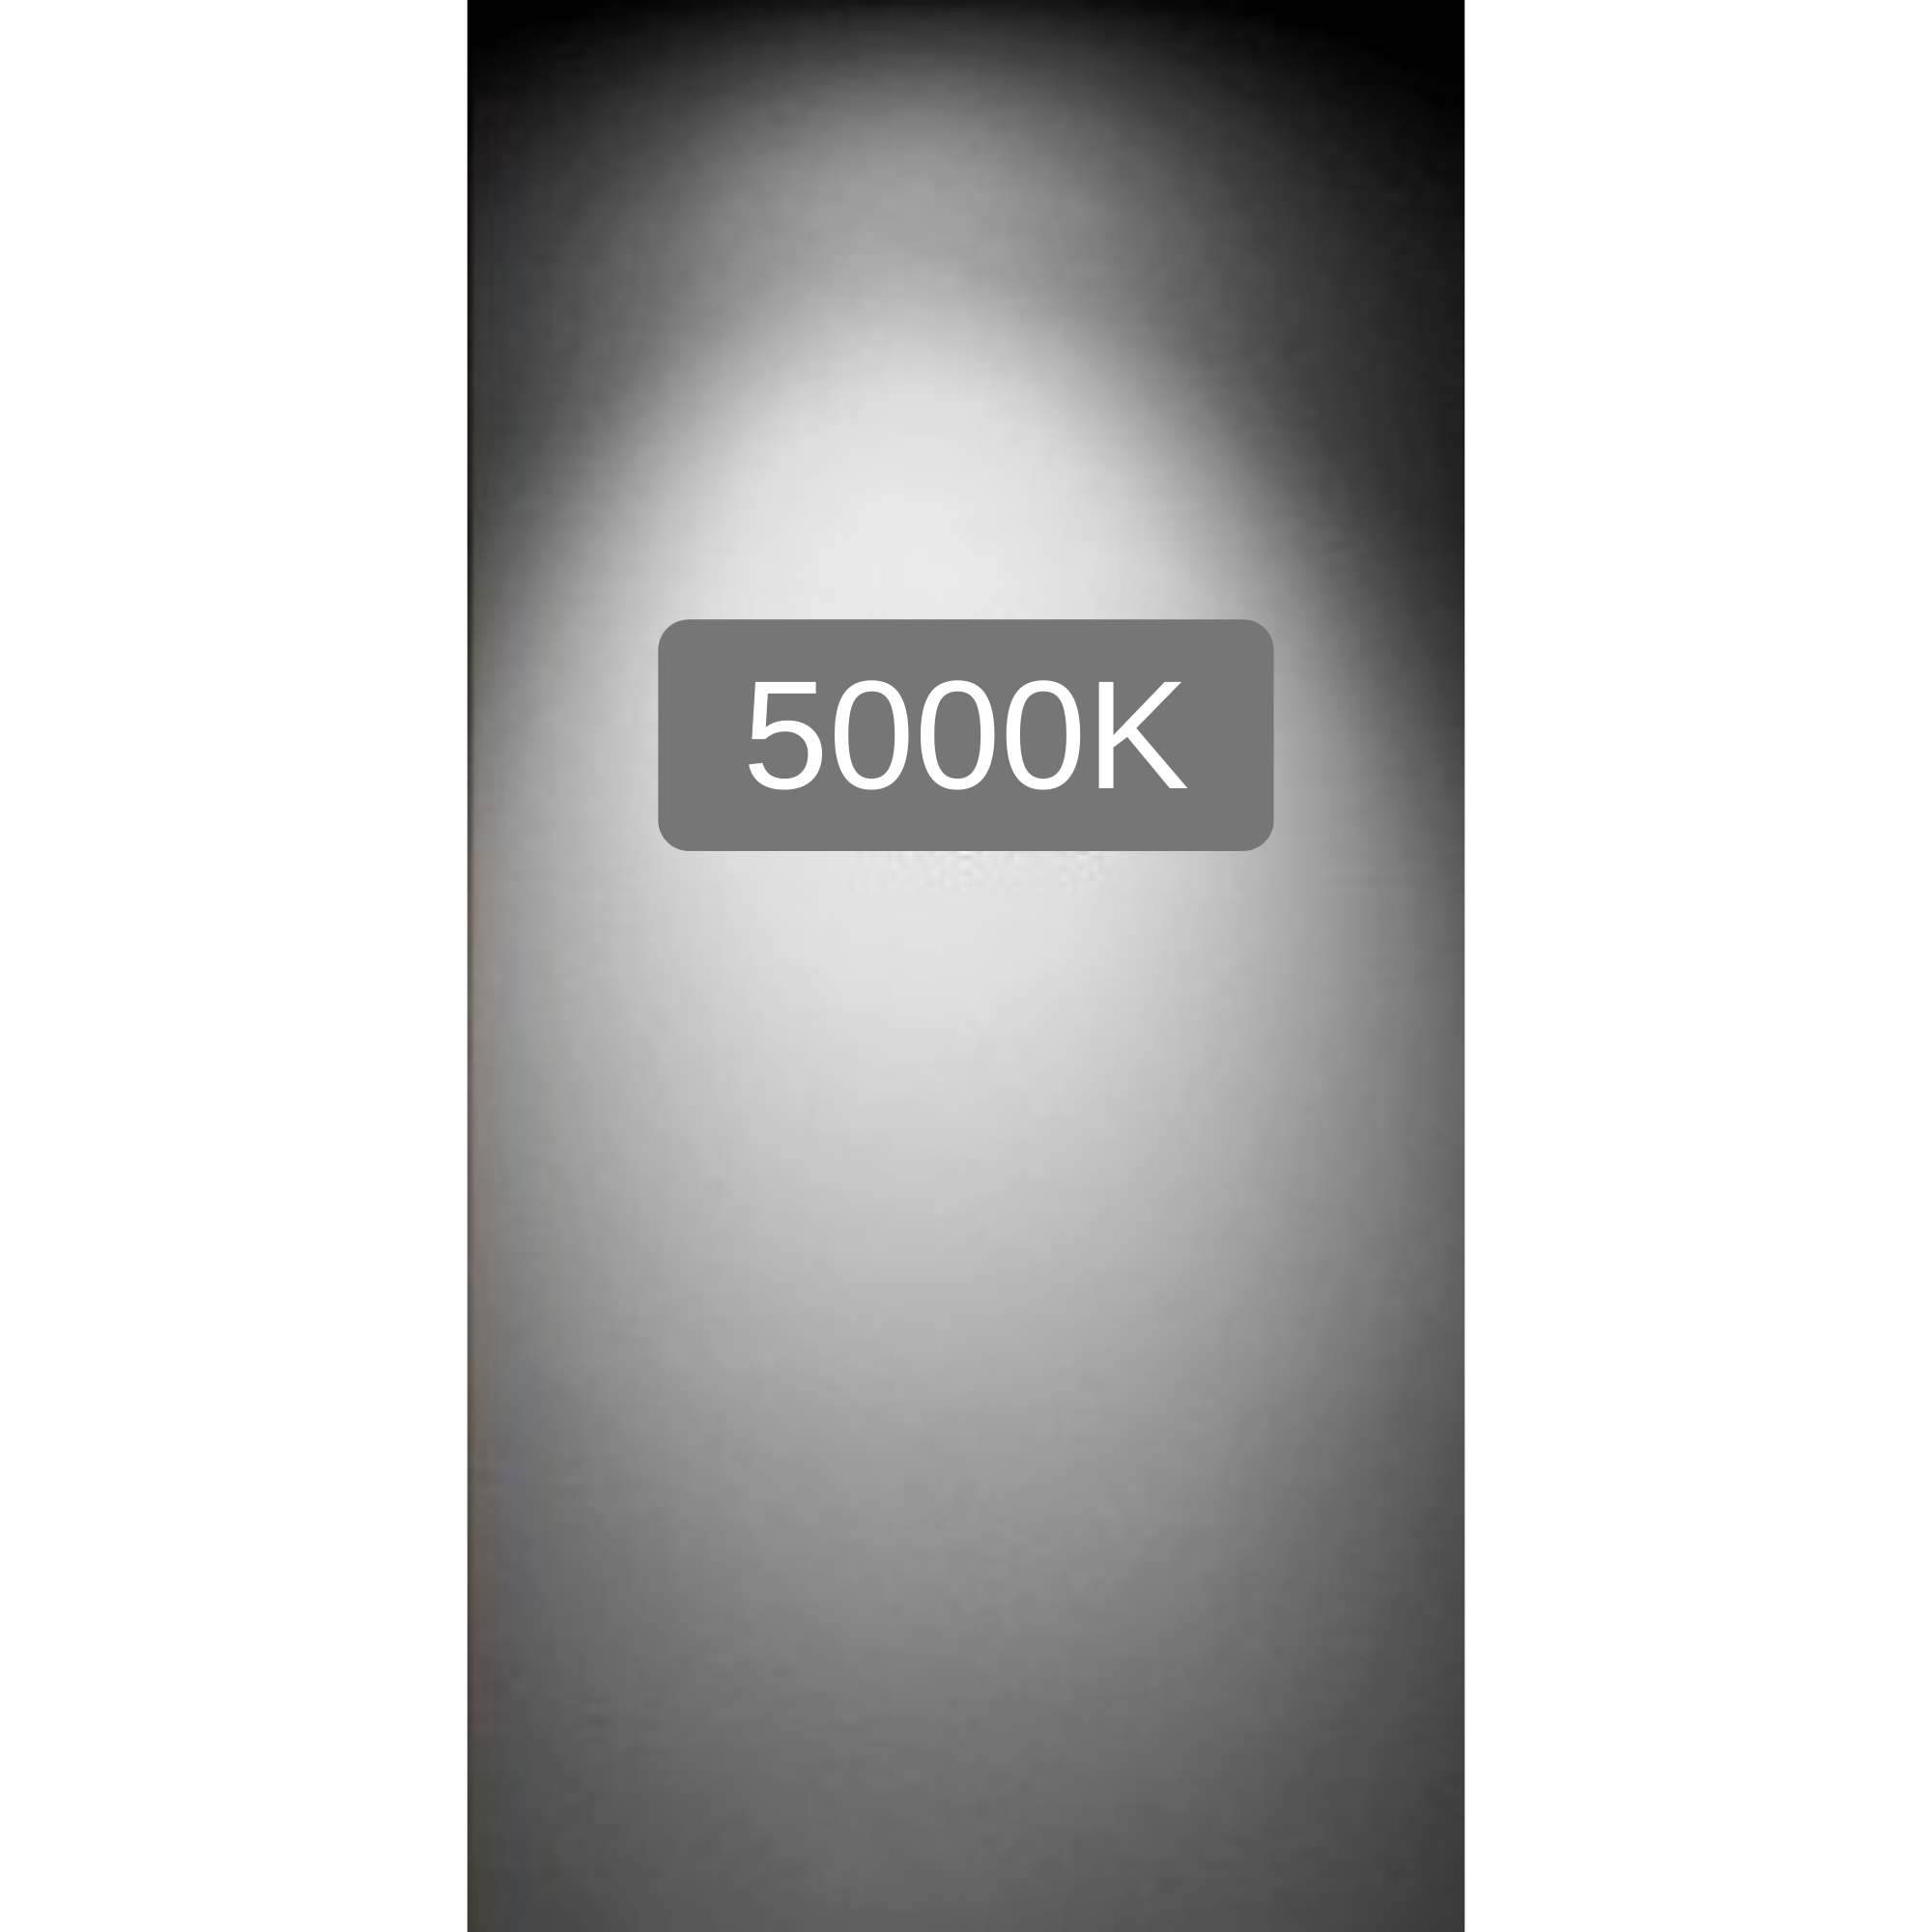 DawnRay LED PAR20, 7W, 500 Lumens, 3000K/5000K, Warm White/Cool White ,Dimmable ,3 Years Warranty